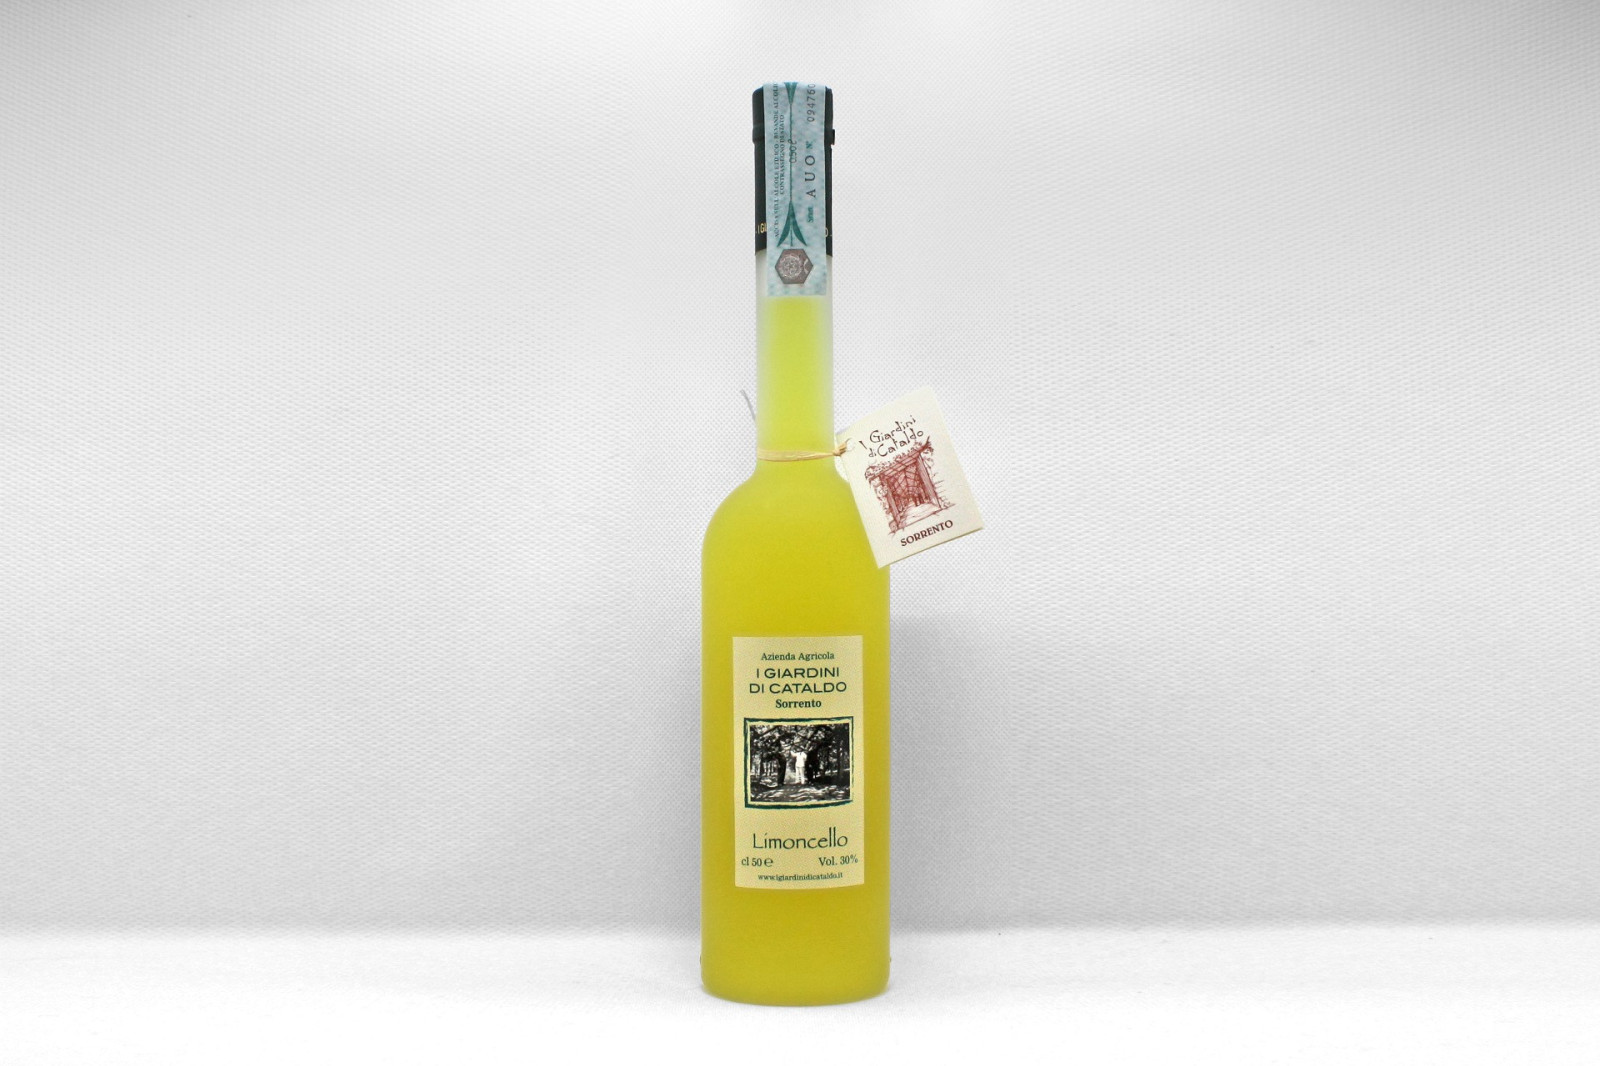 Cataldo 50 glass a bottle I Sorrento - Sorrento cl IGP Di in Limoncello Giardini company agricultural